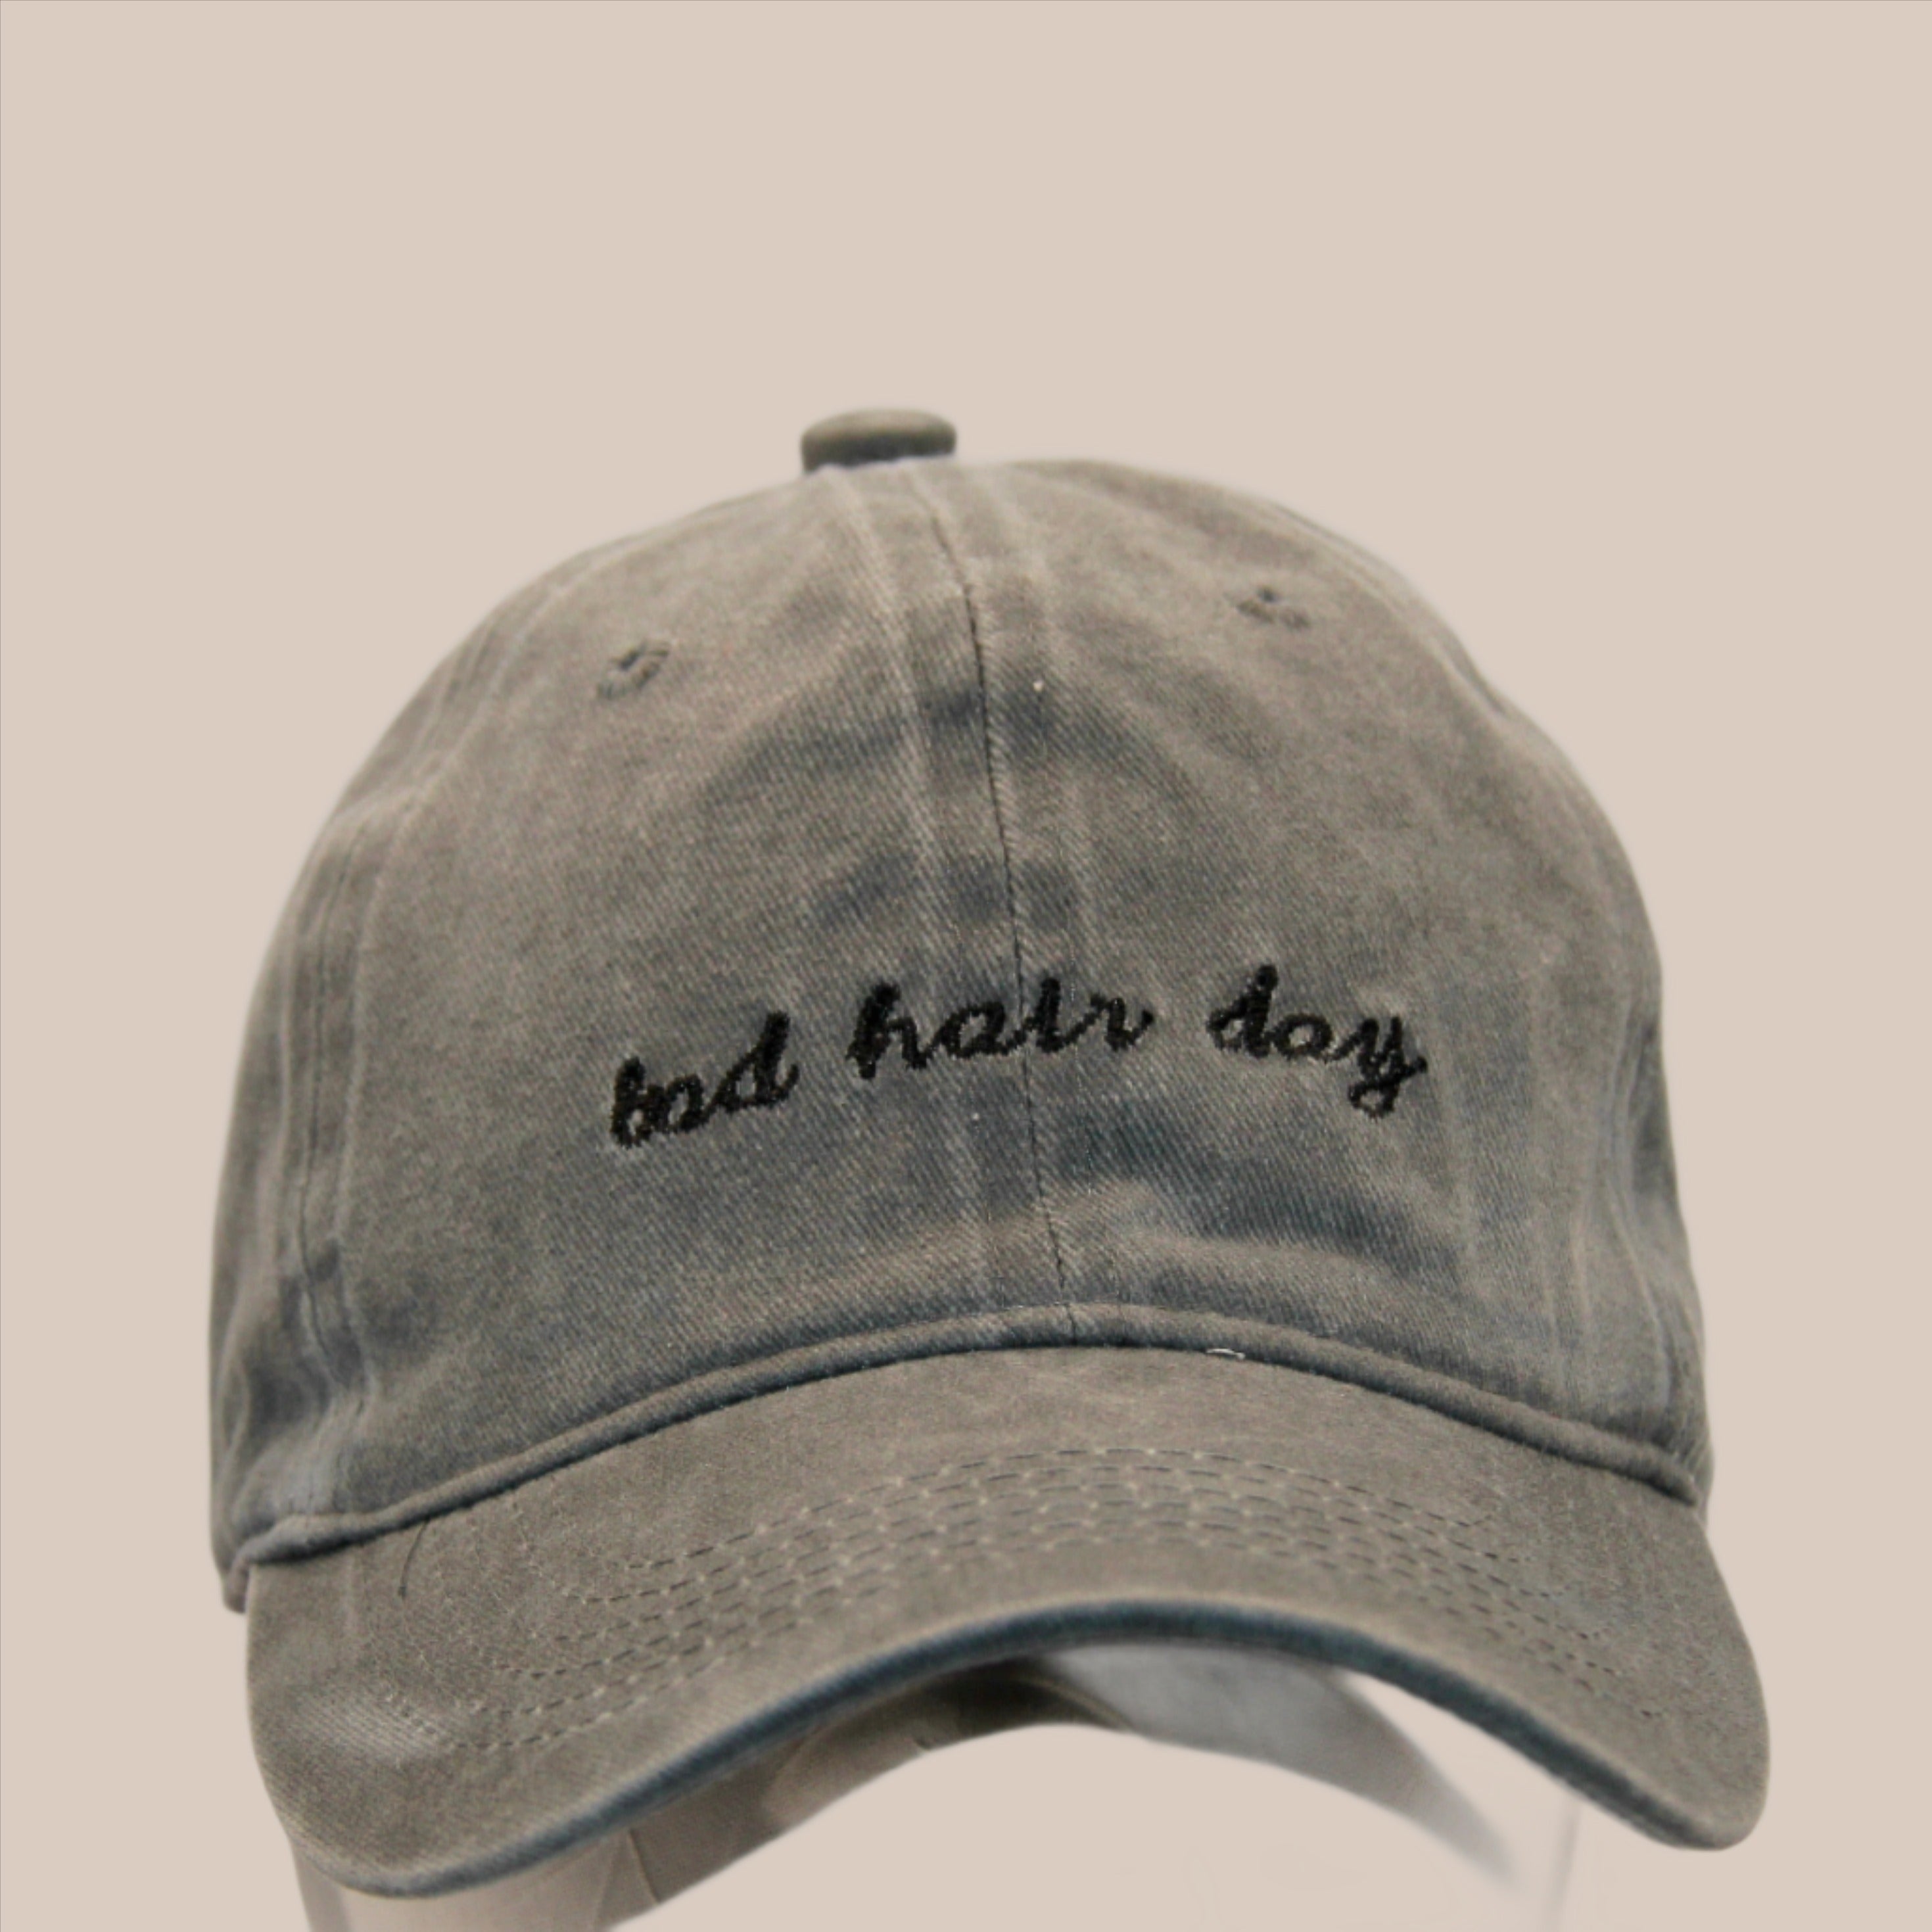 Bad Hair Day Baseball Cap - Light Grey